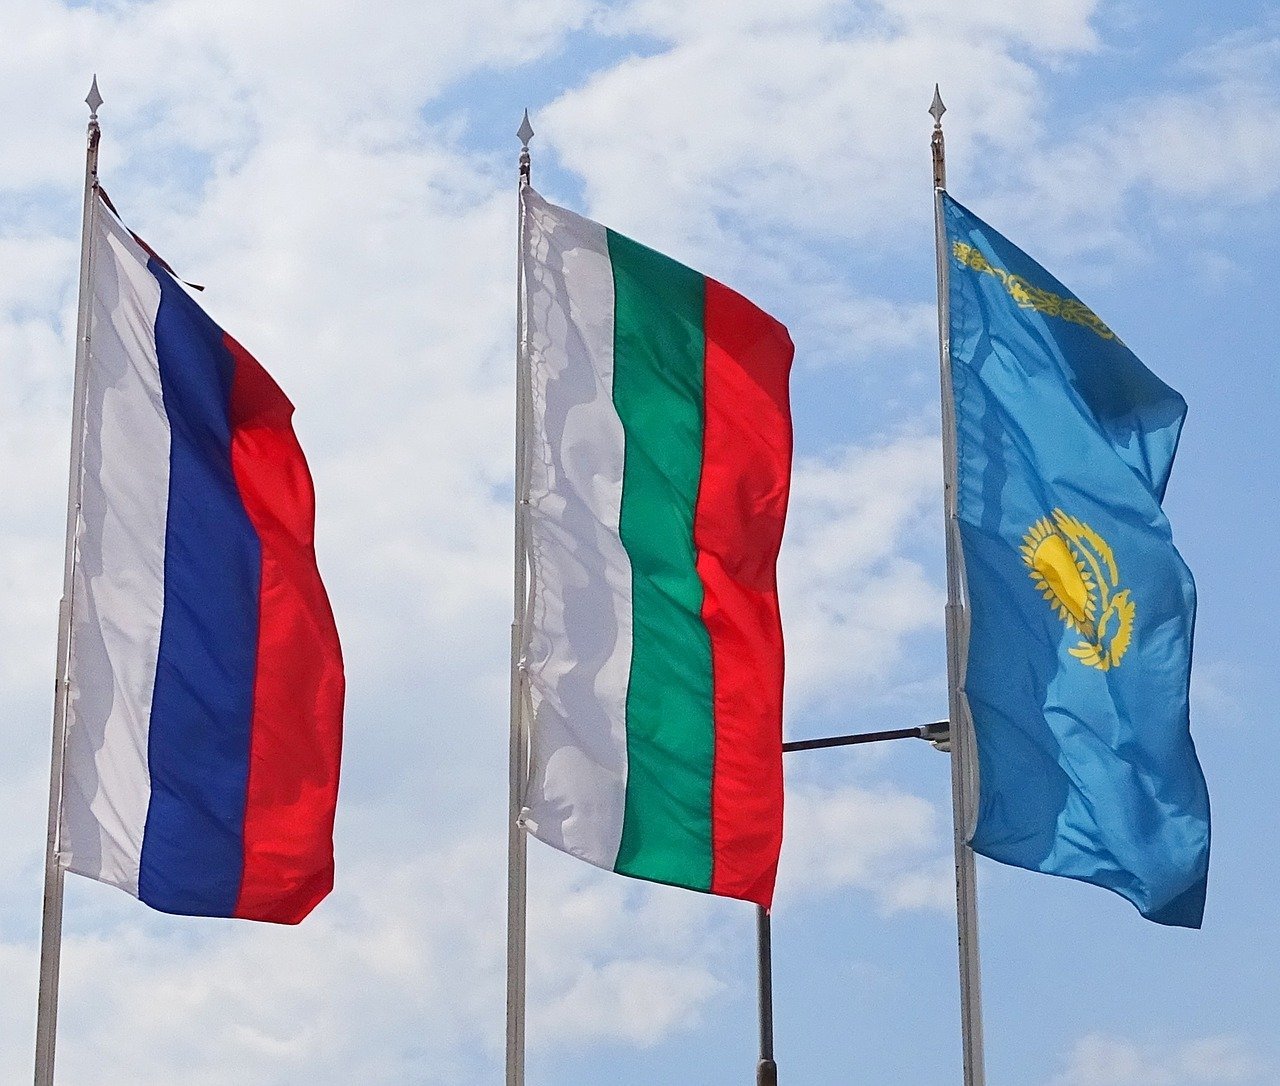 Bulgaria announces the expulsion of a Russian diplomat